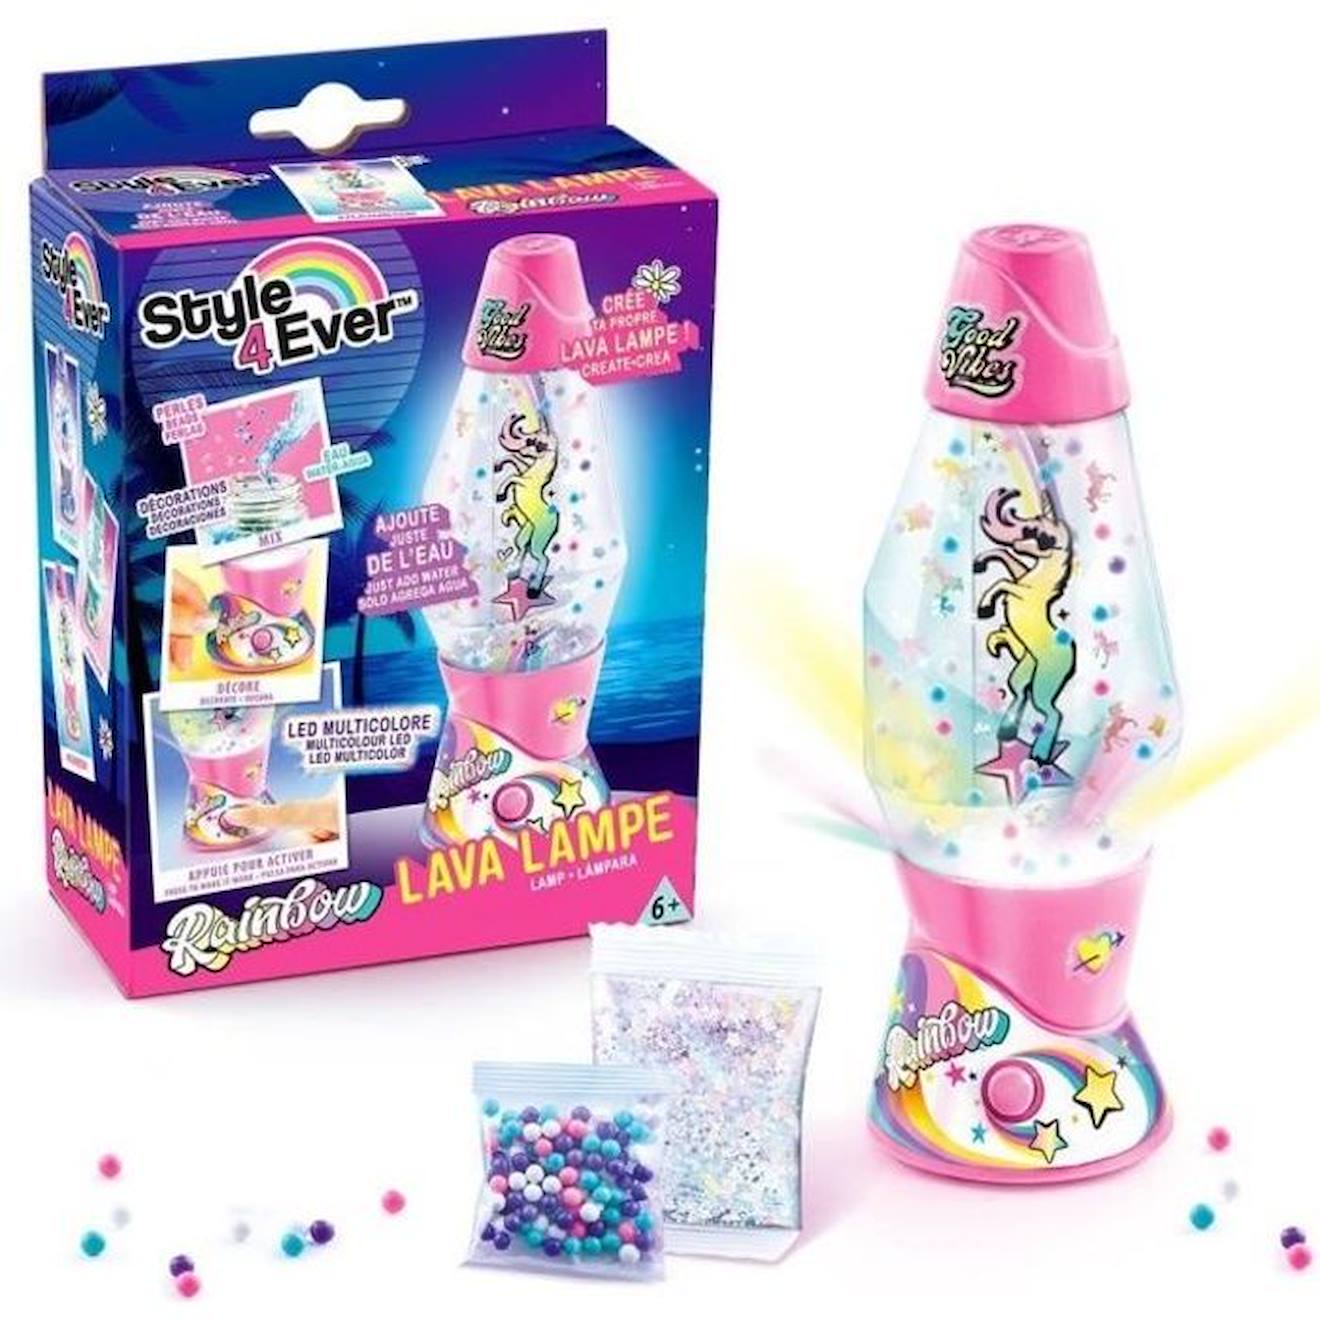 Mini Lava Lampe Diy - Canal Toys - Style 4 Ever - Ofg 234 - Rose - Multicolore - Enfant Rose